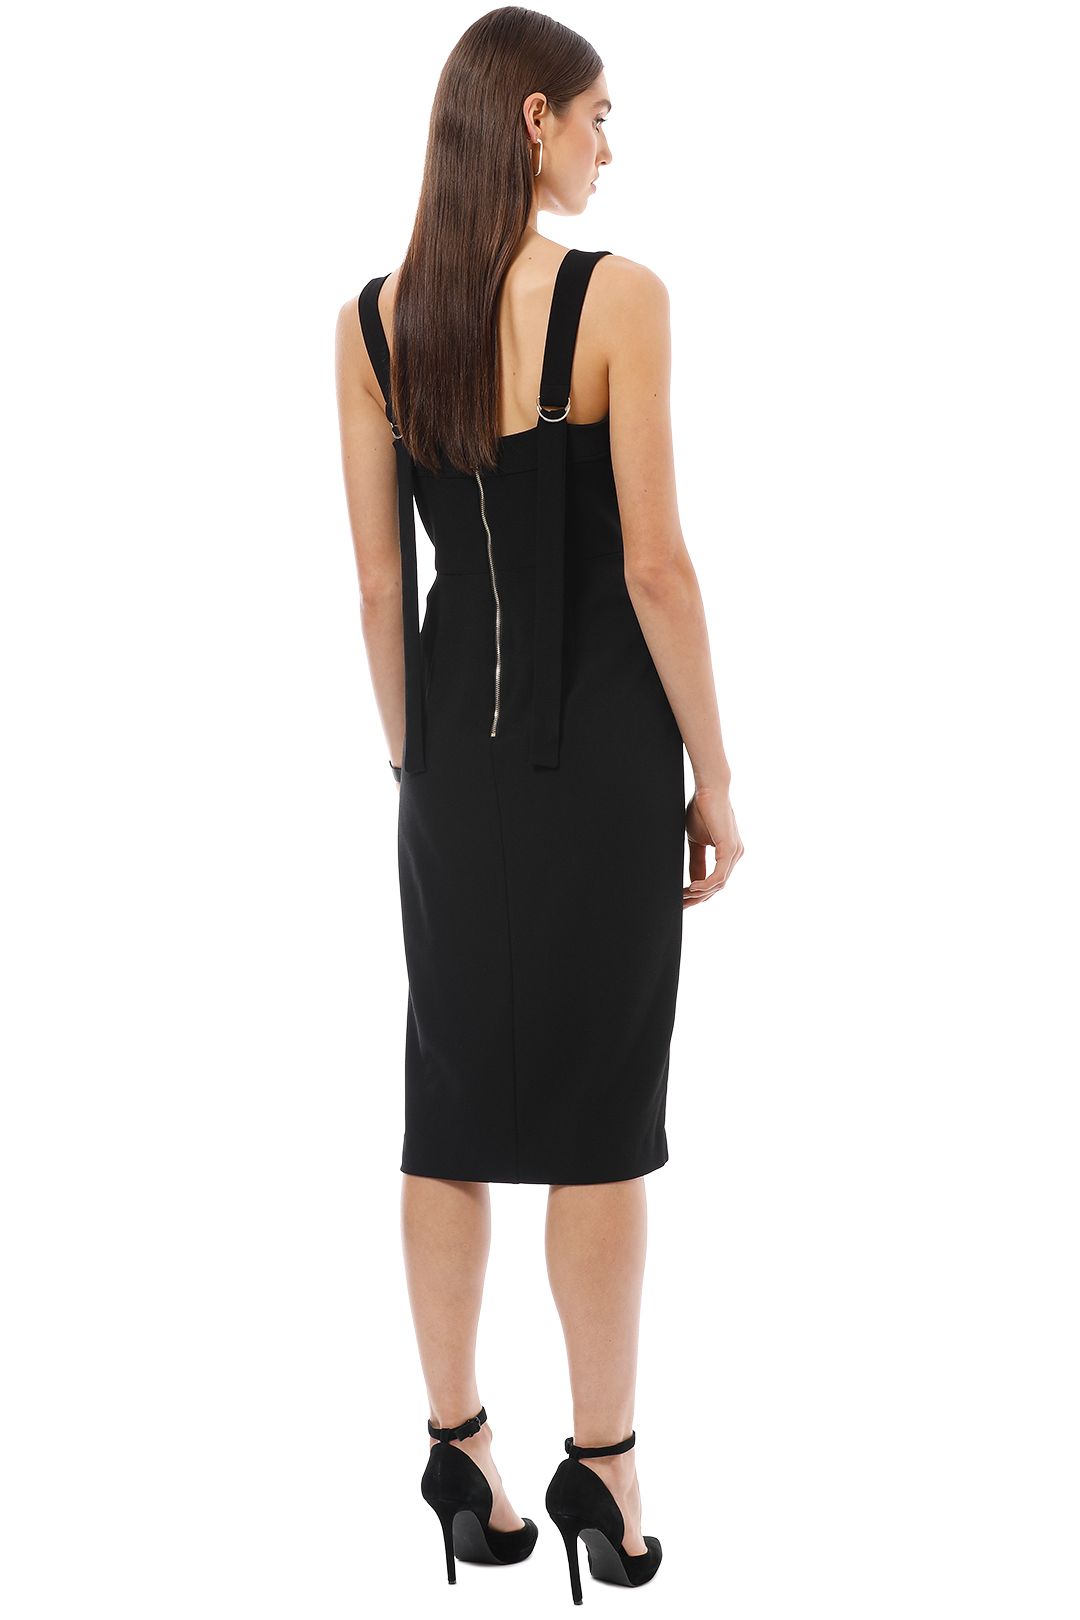 Rebecca Vallance - Celestina Tie Dress - Black - Back